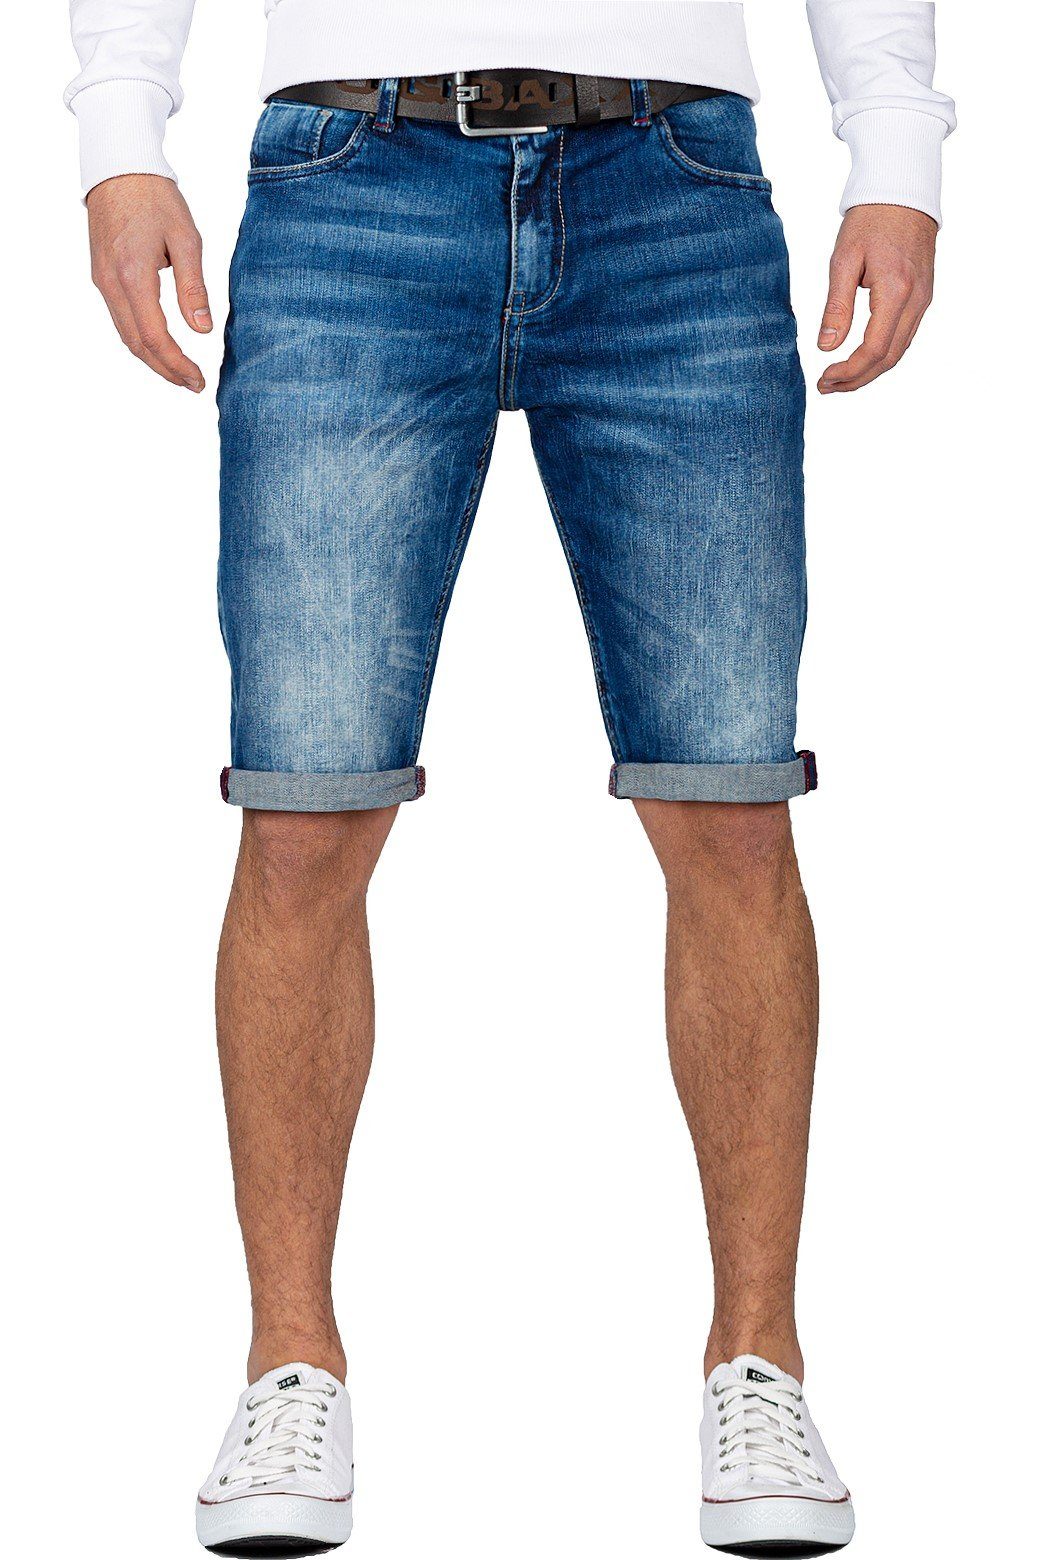 Cipo & Baxx Jeansshorts »Herren kurze Hose BA-CK184« Casual Shorts  gekrämpelt online kaufen | OTTO